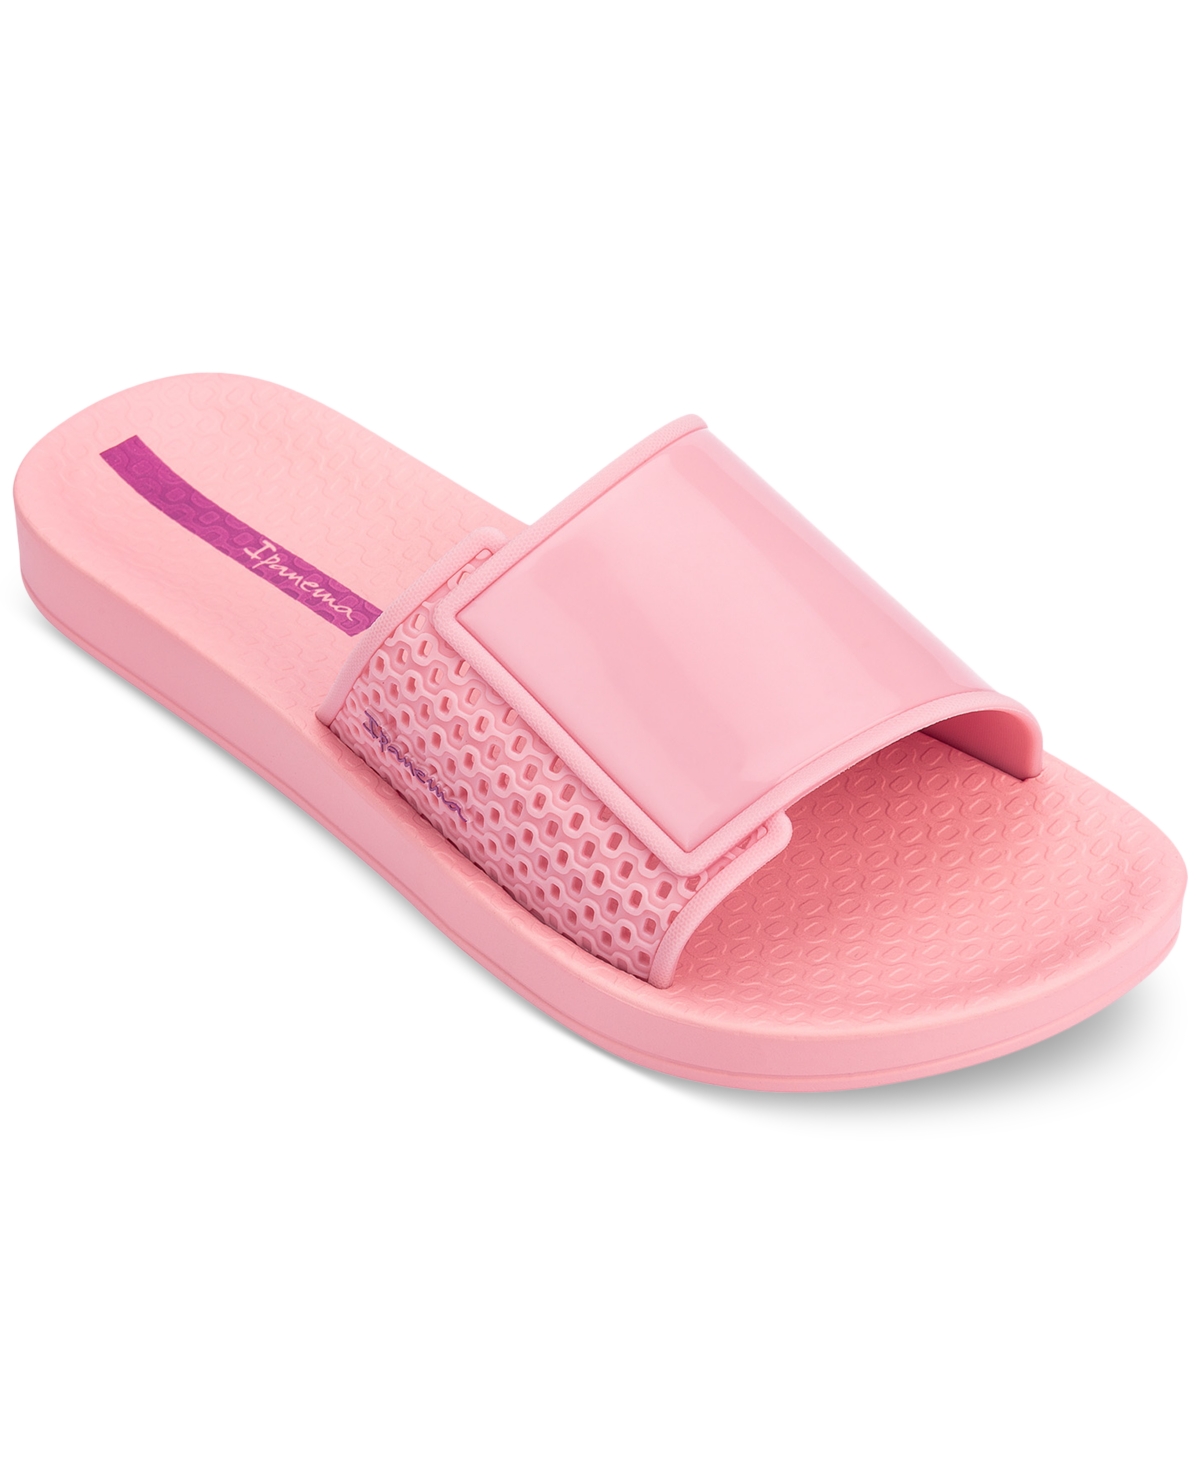 Ipanema Women's Anatomic Urban Slip-on Slide Sandals In Pink,pink